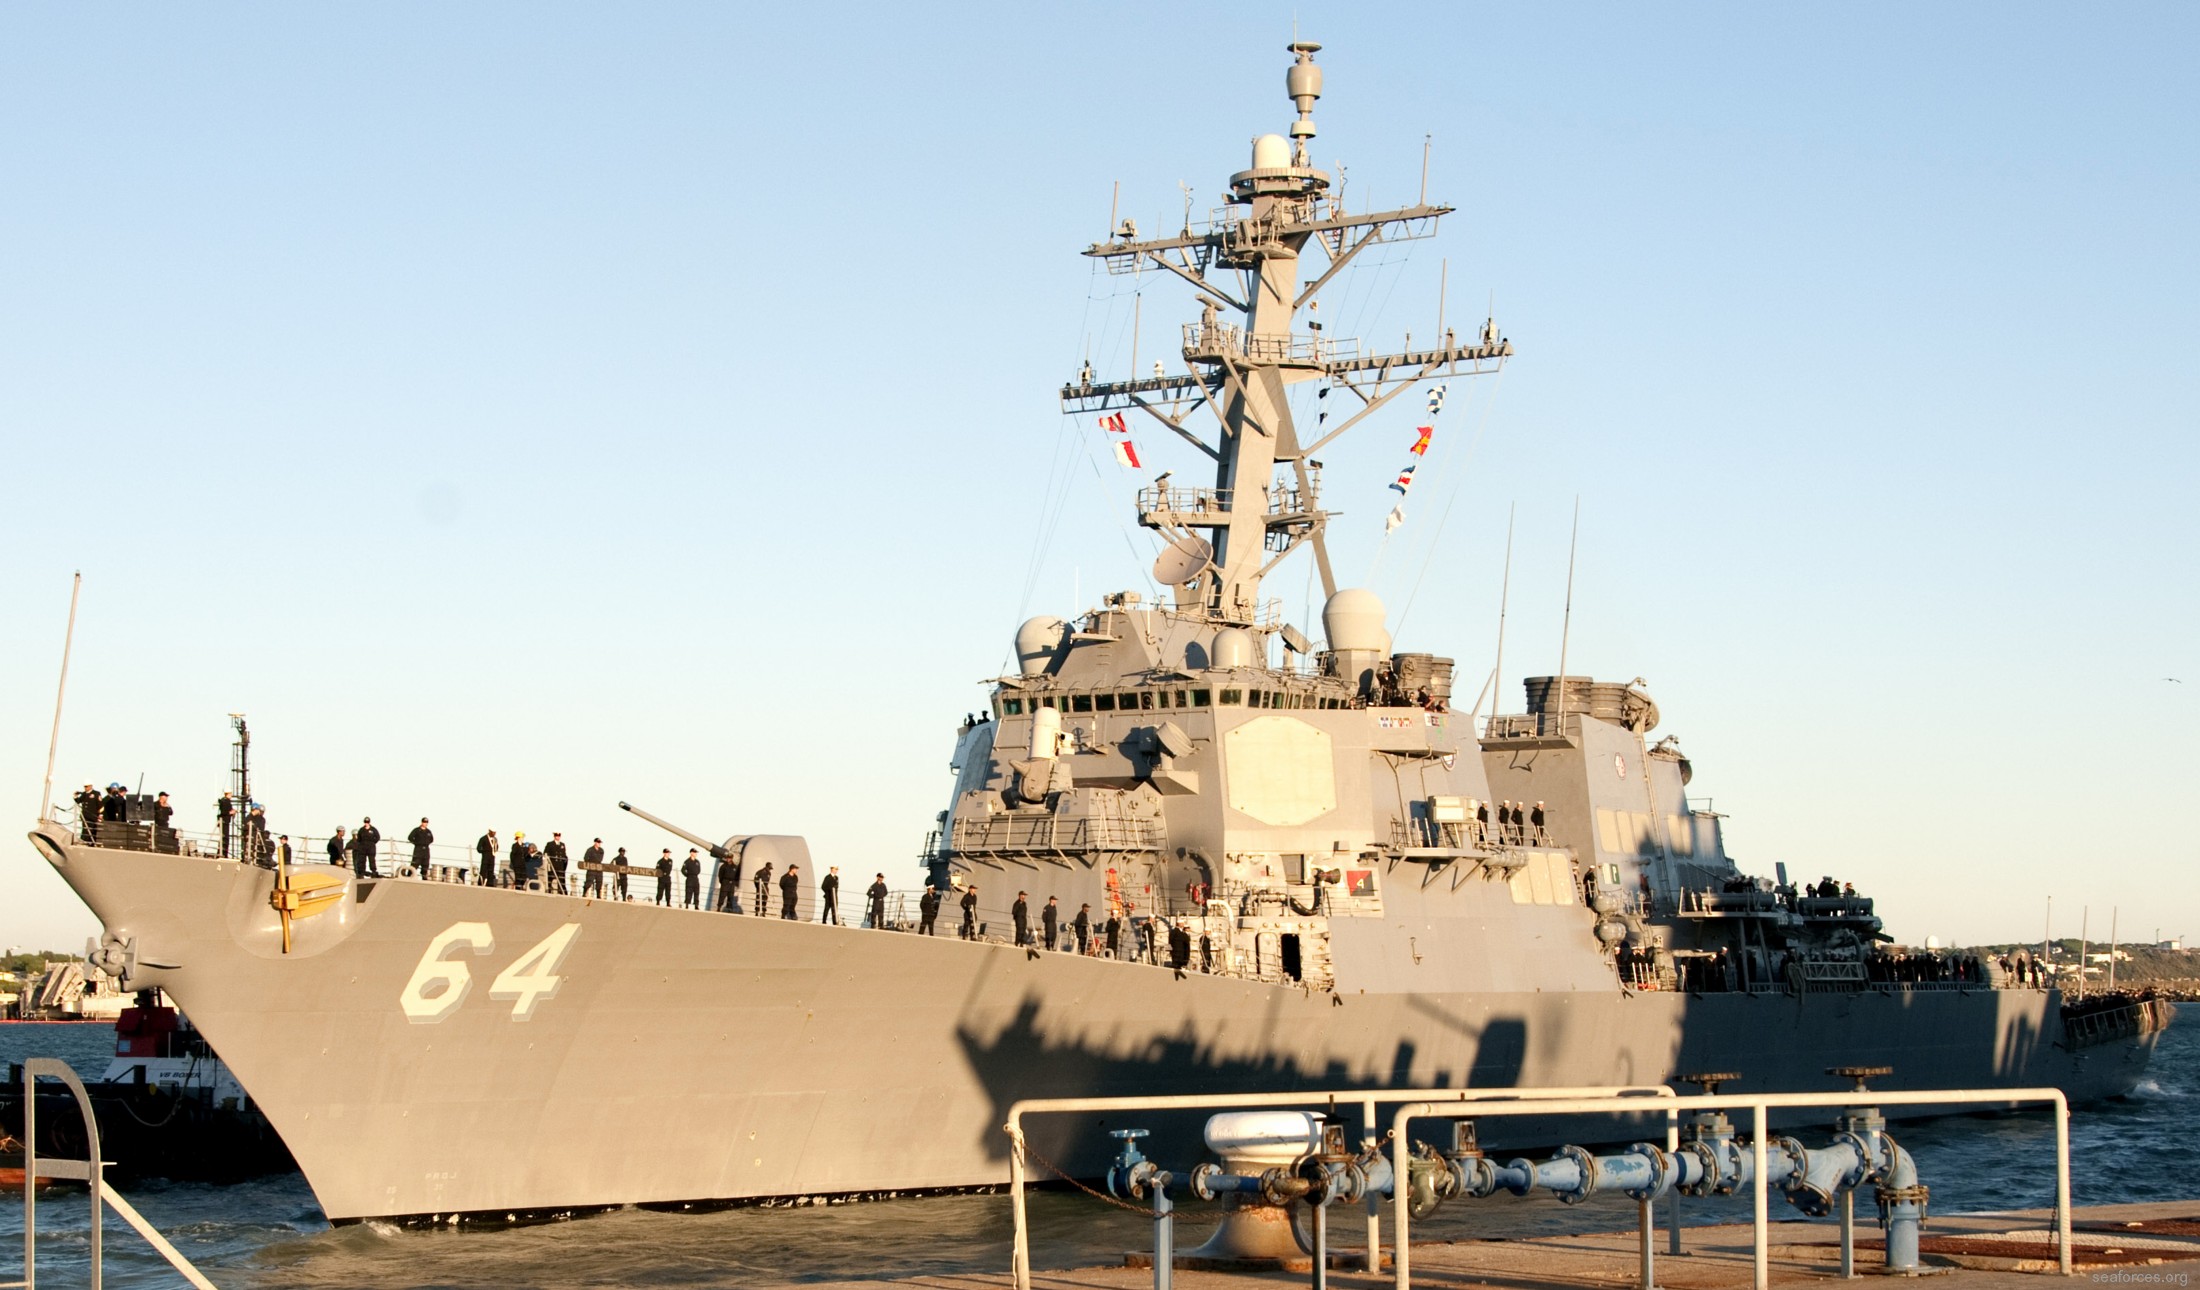 ddg-64 uss carney destroyer arleigh burke class navy 93 naval station rota spain